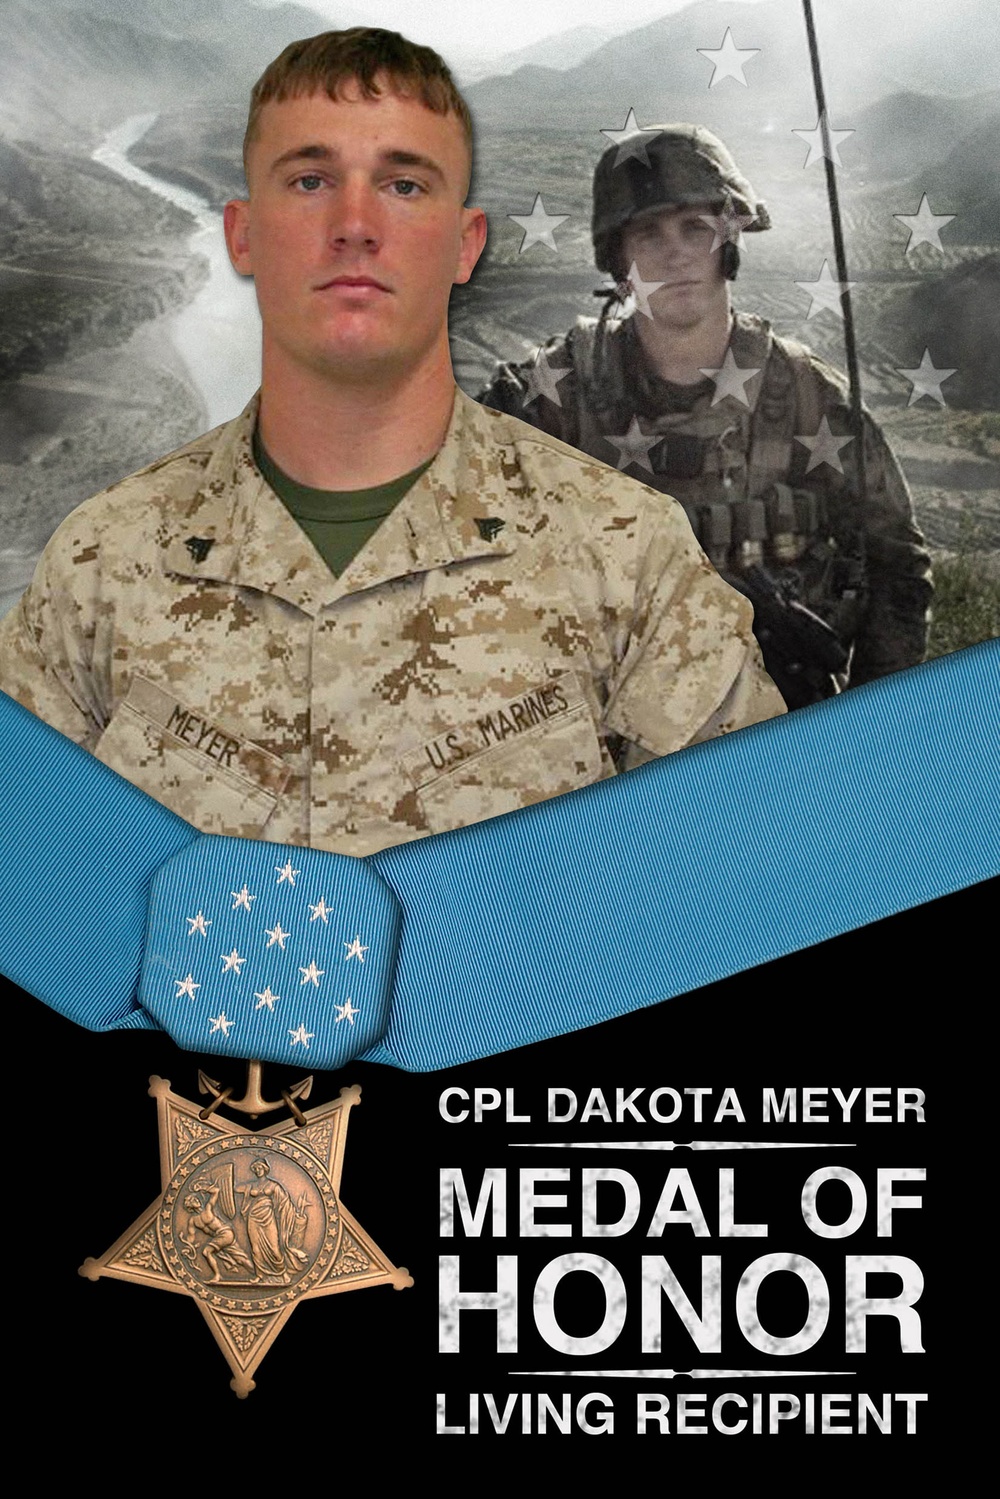 Sgt. Dakota Meyer